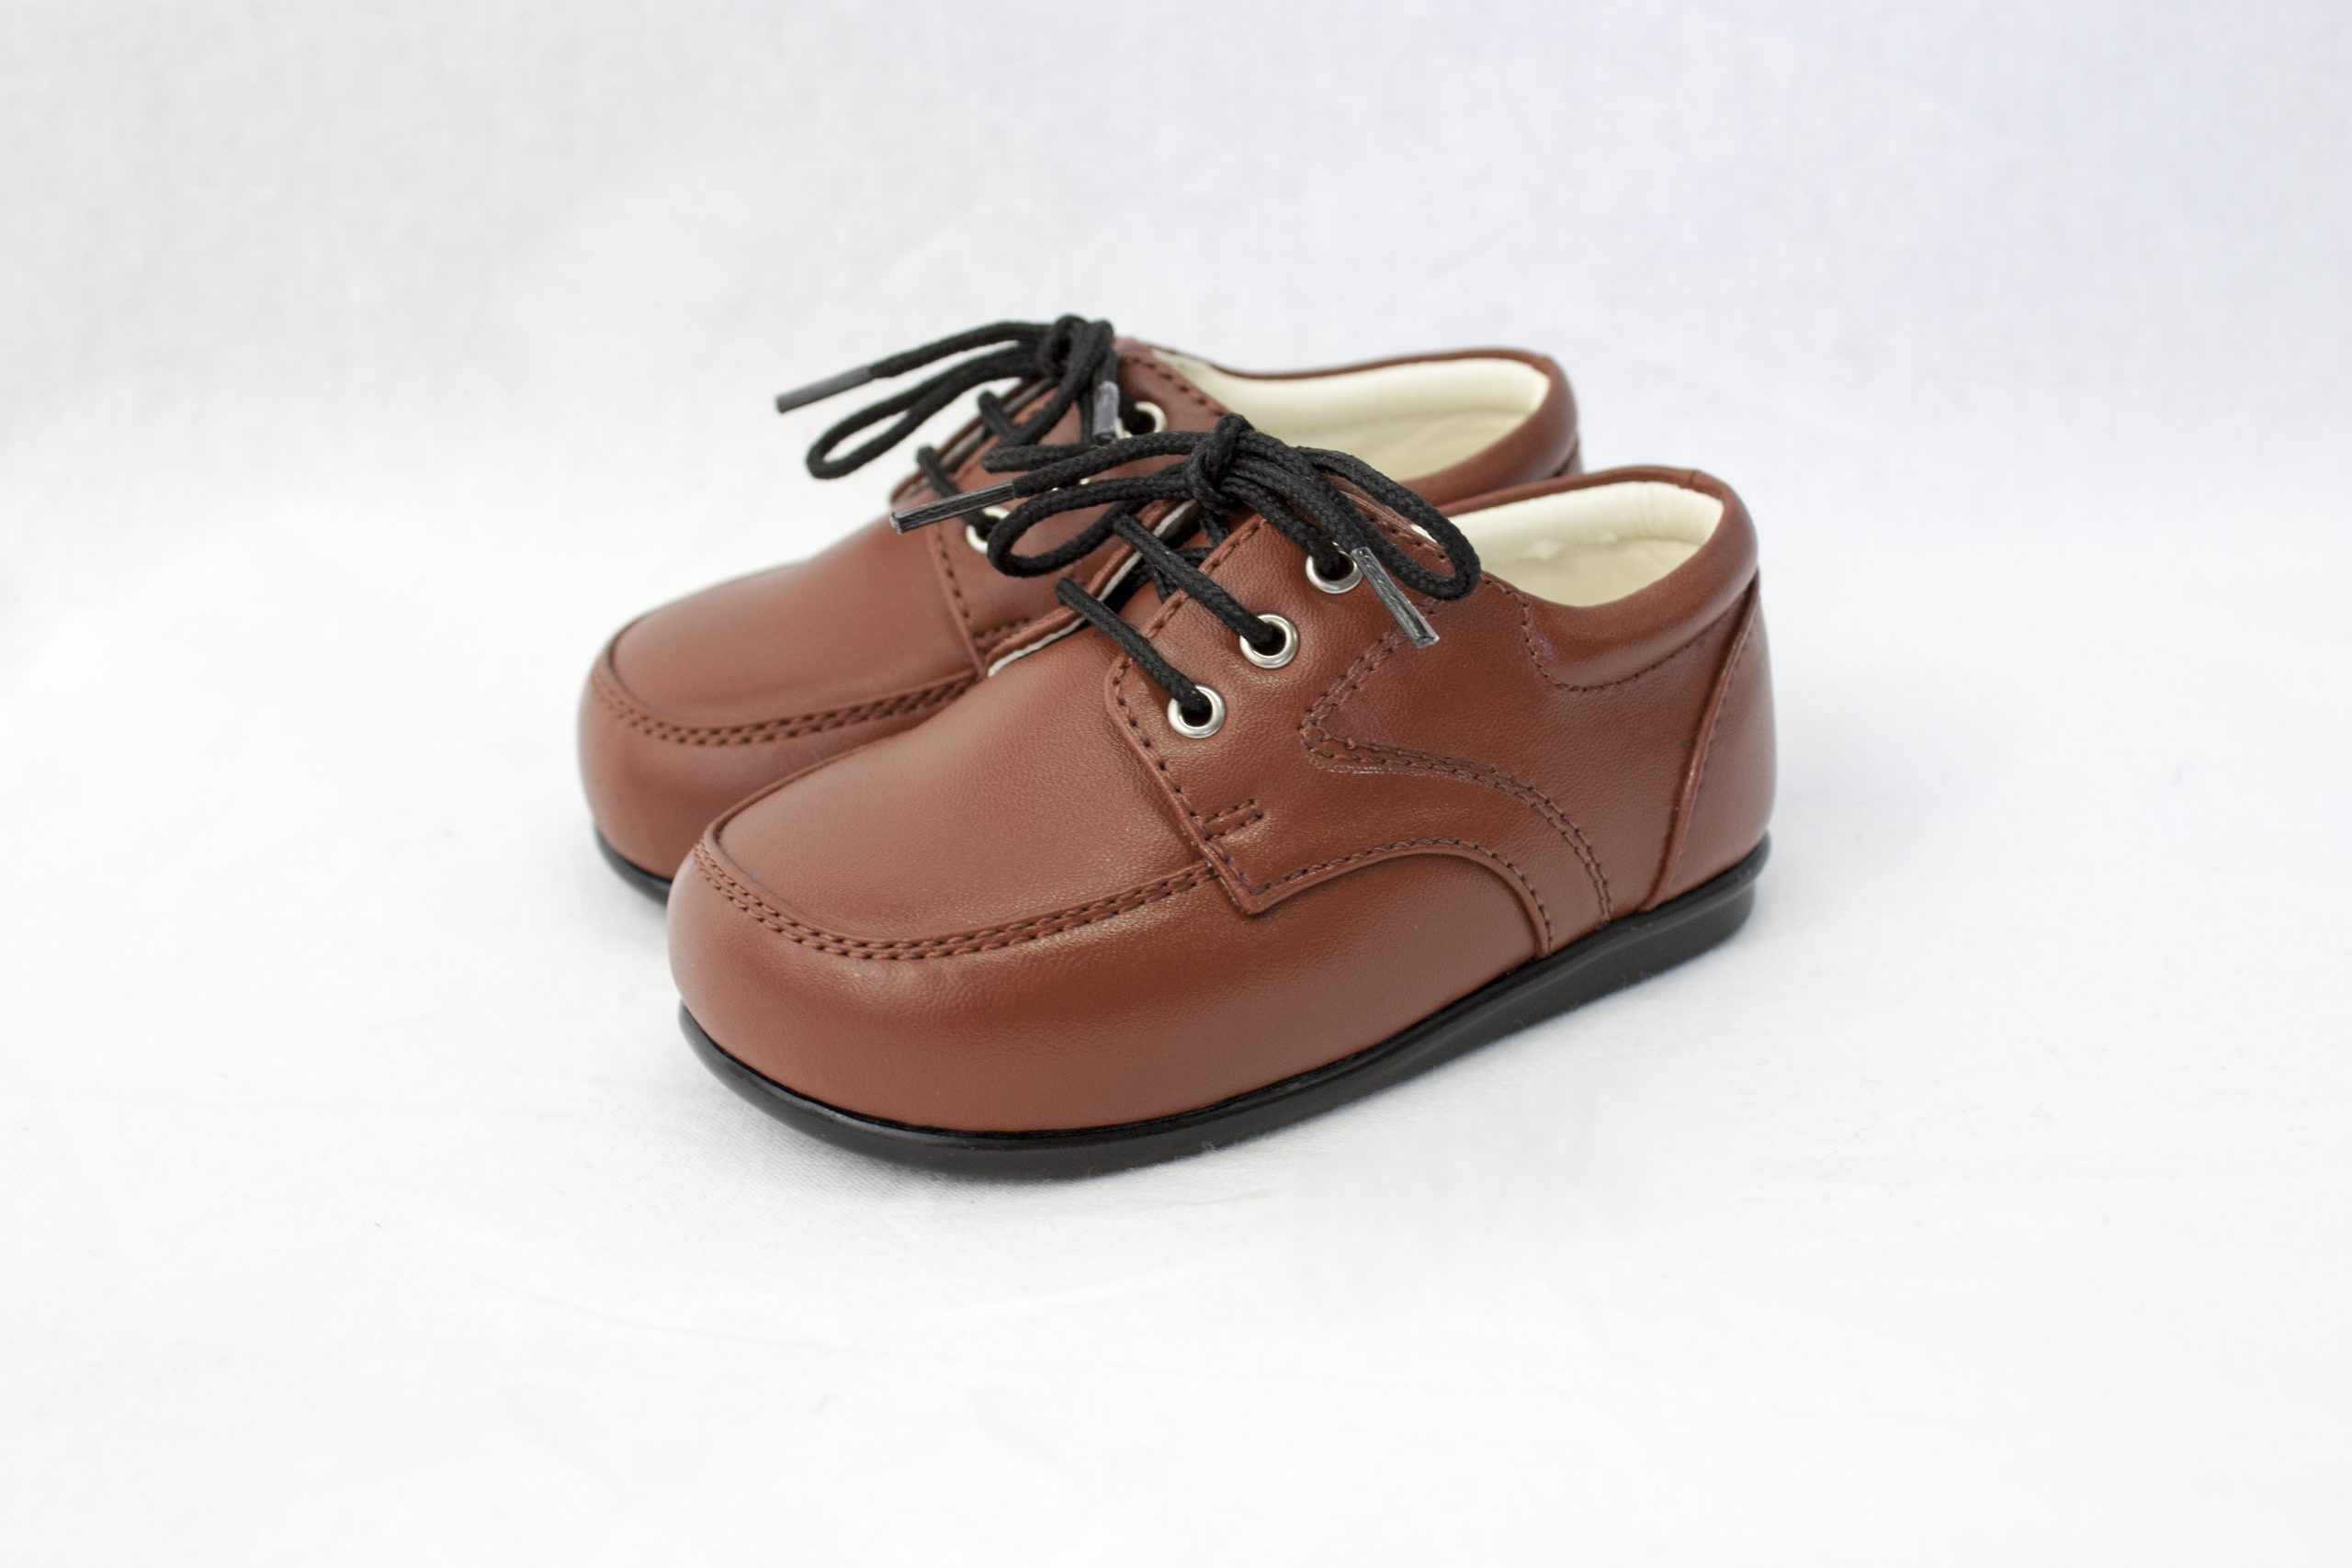 Boys Early Steps Royal Shoes in Brown | Little Giants Ltd